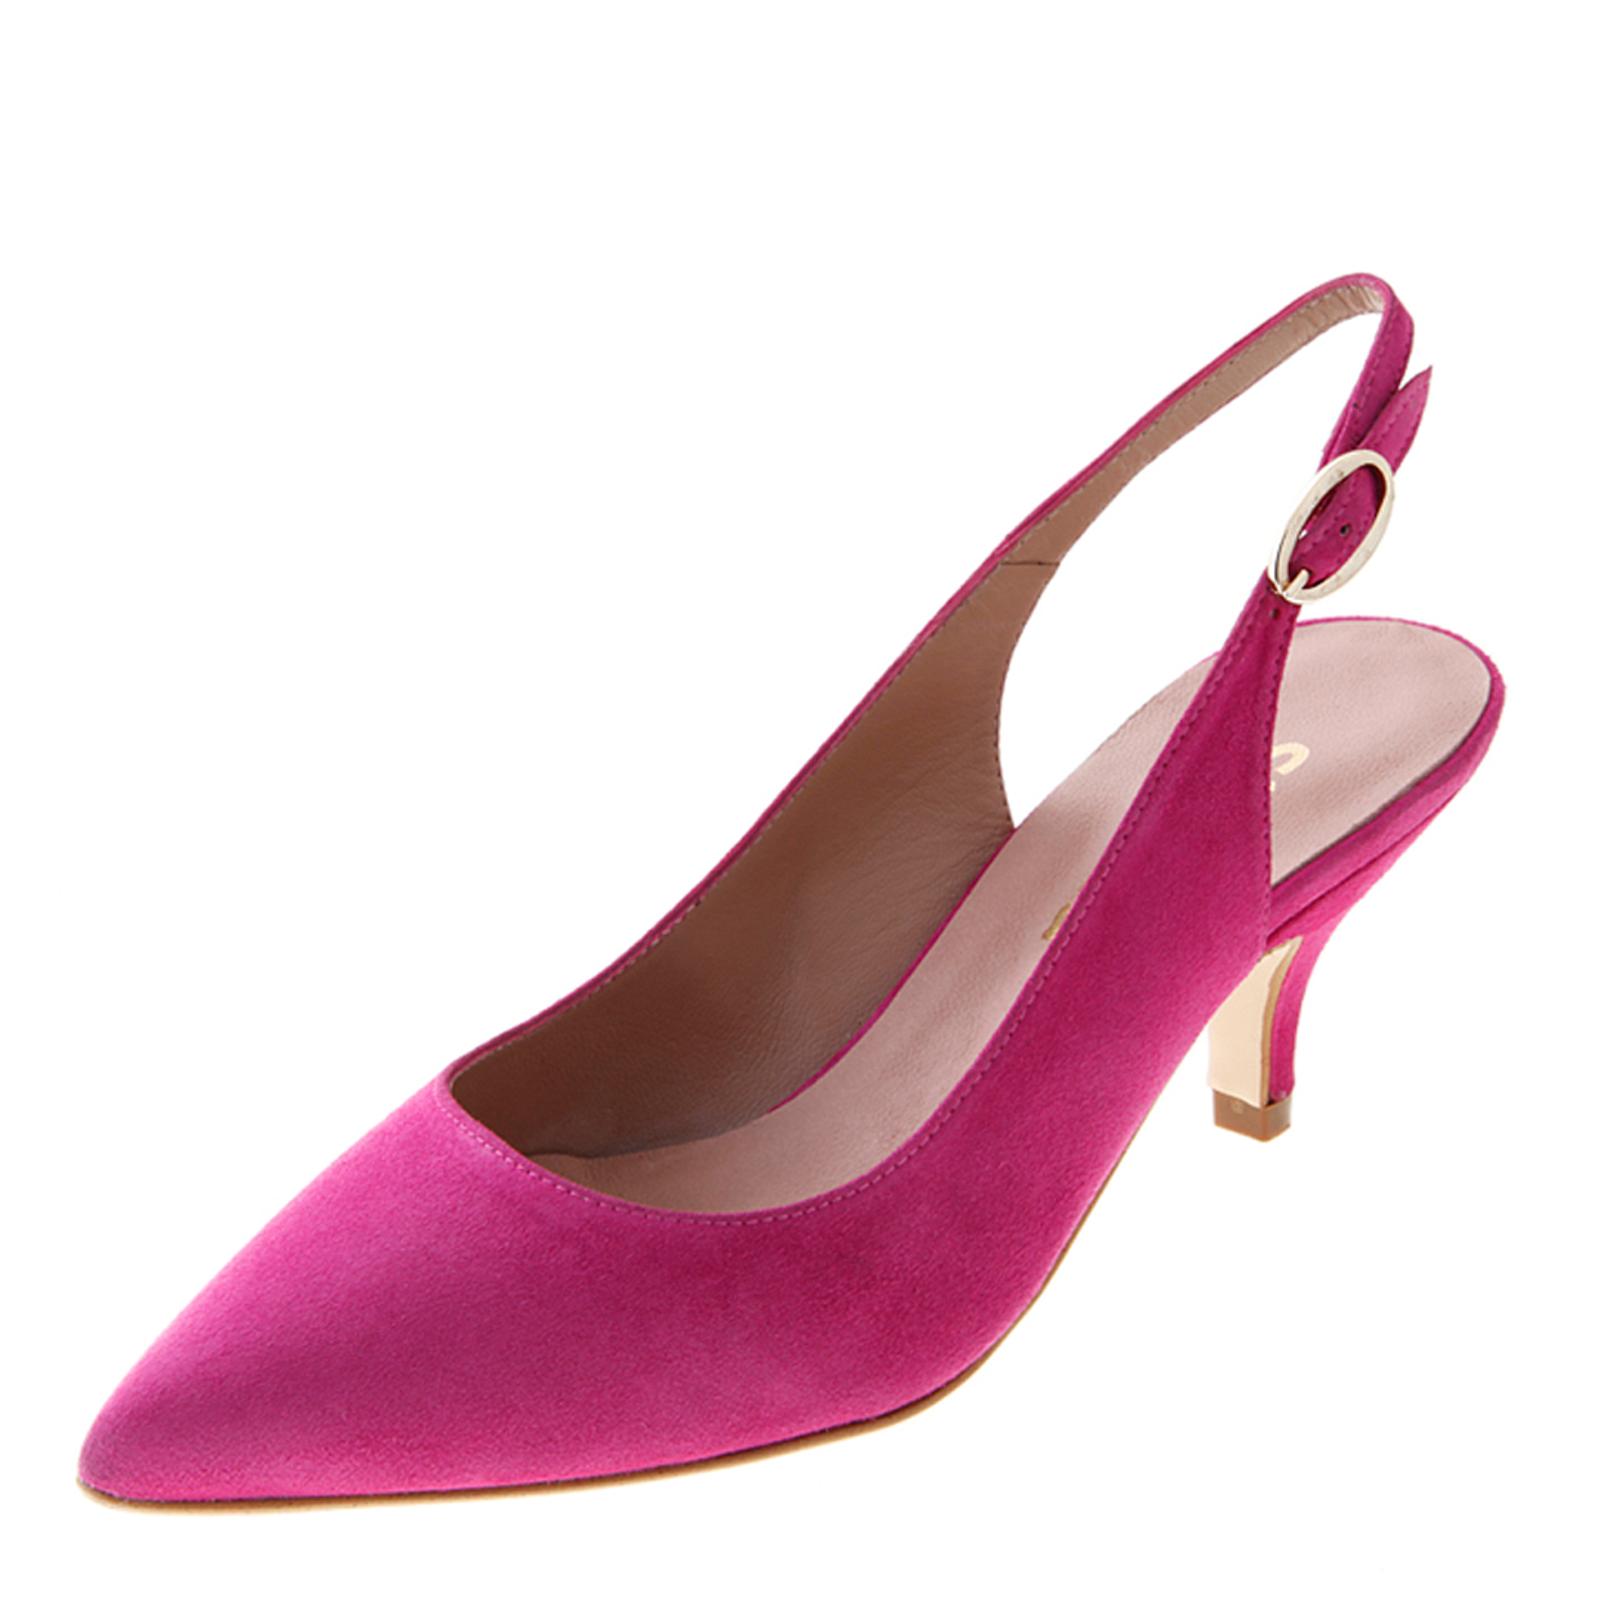 Pink Suede Slingback Shoes Heel 5cm - BrandAlley